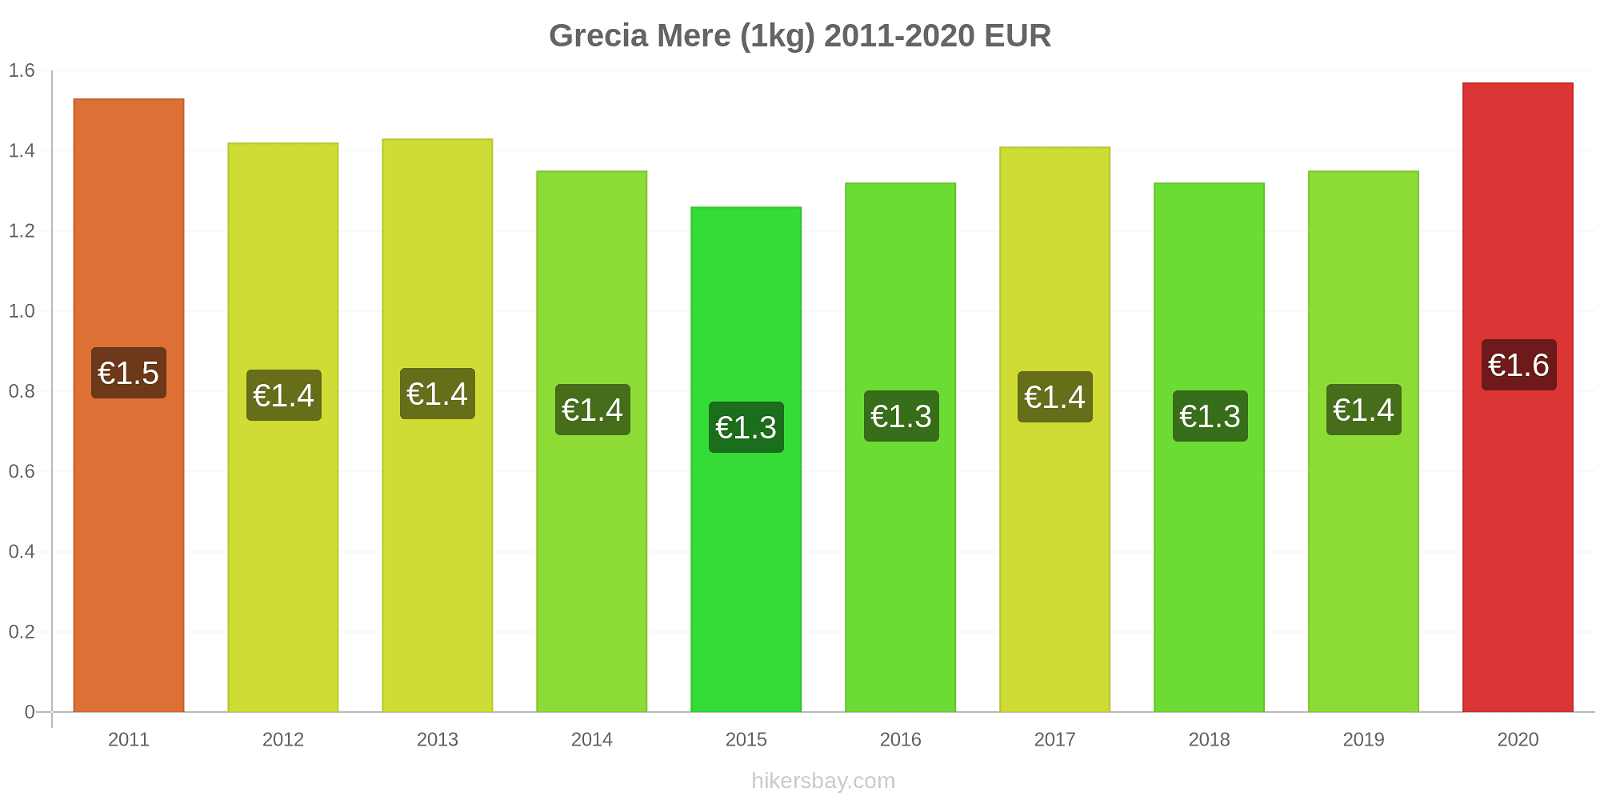 Grecia modificări de preț Mere (1kg) hikersbay.com